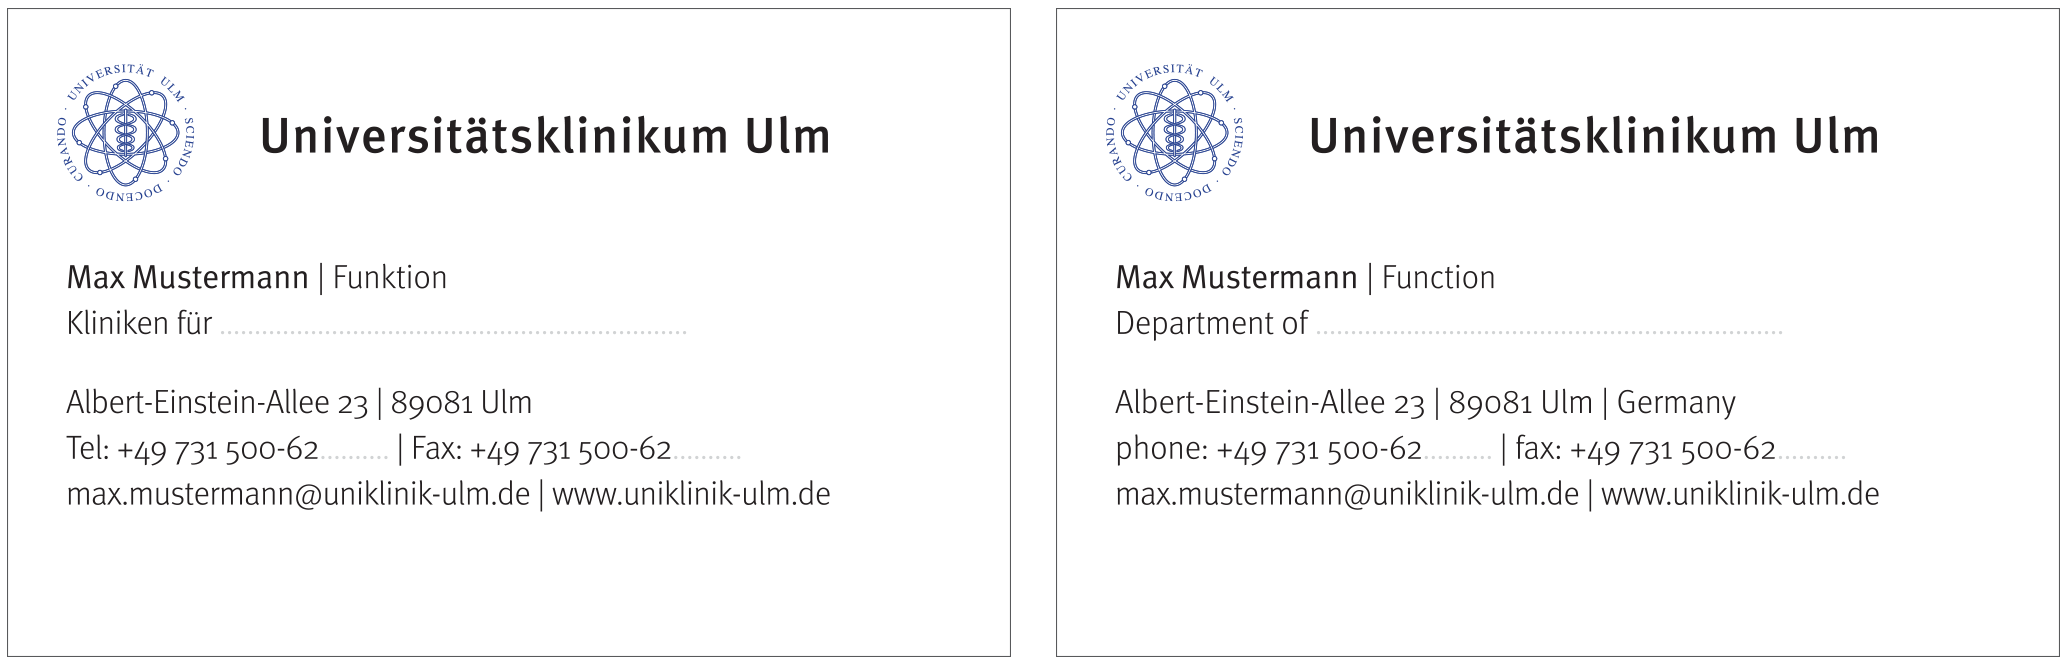 Visitenkarten Universitat Ulm